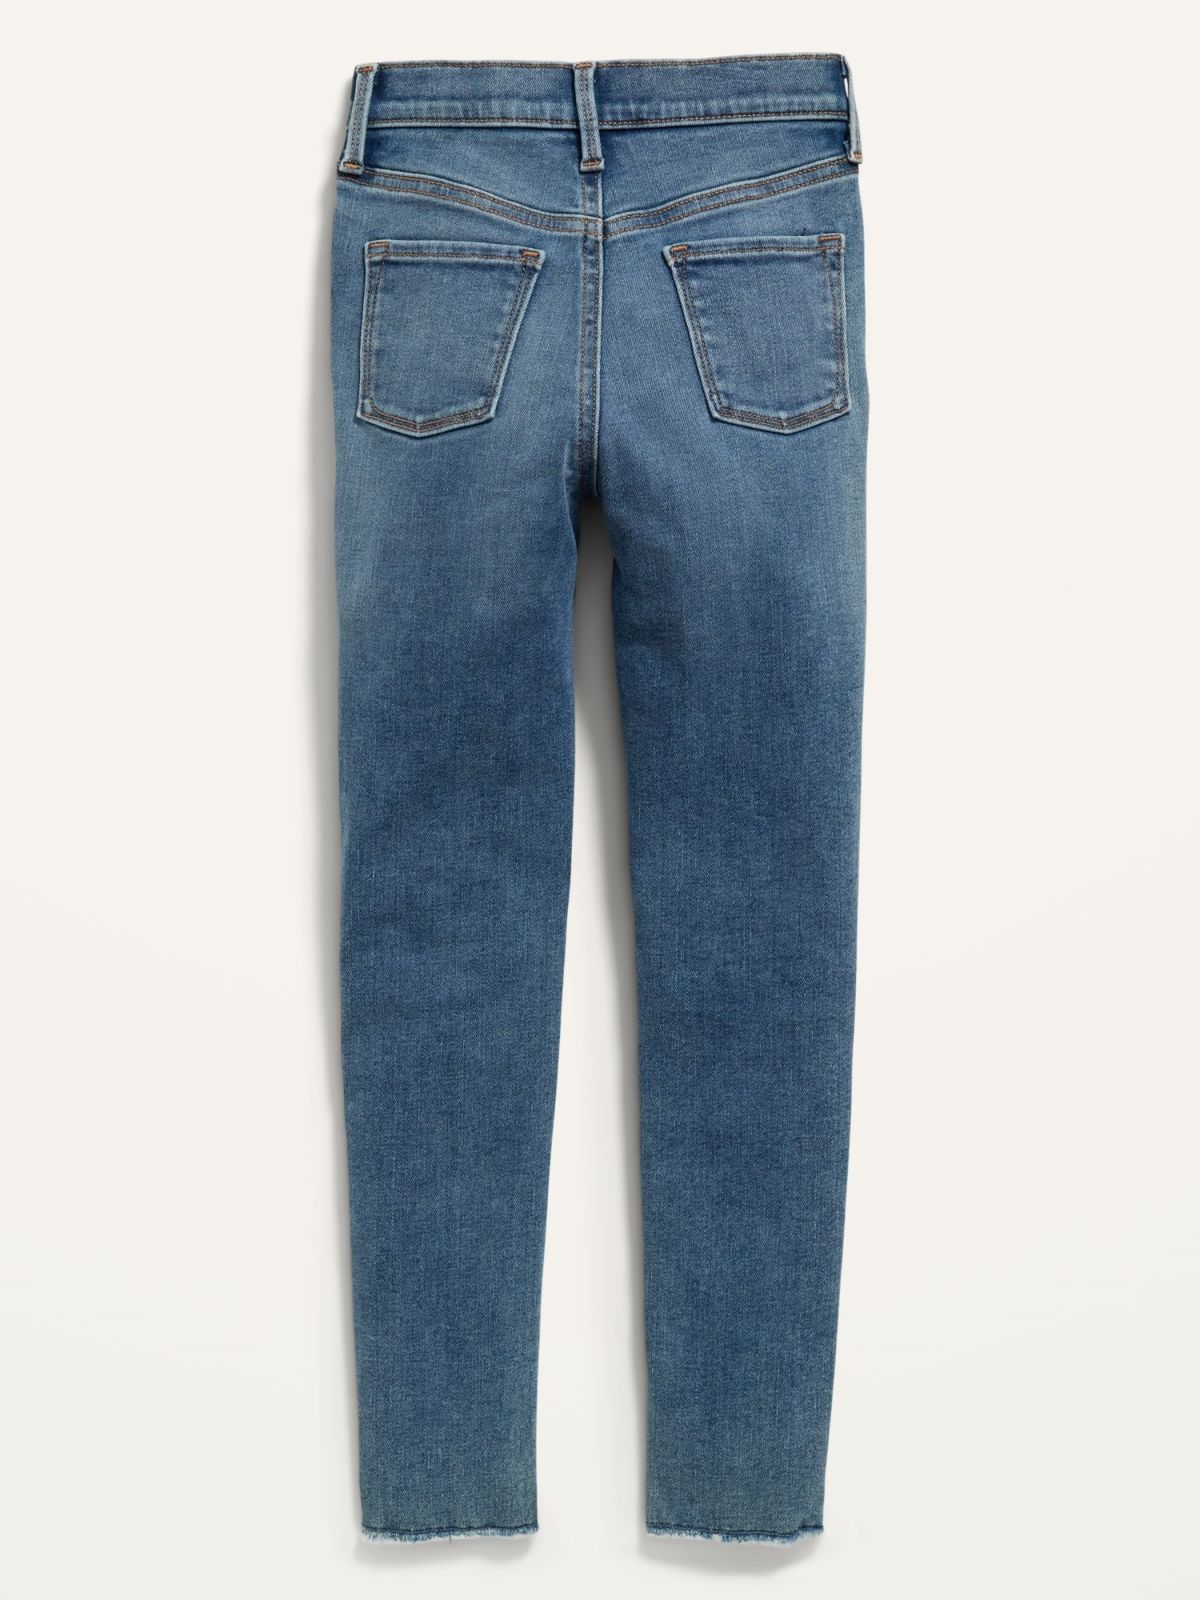  סקיני ג'ינס ארוך עם קרעים של OLD NAVY